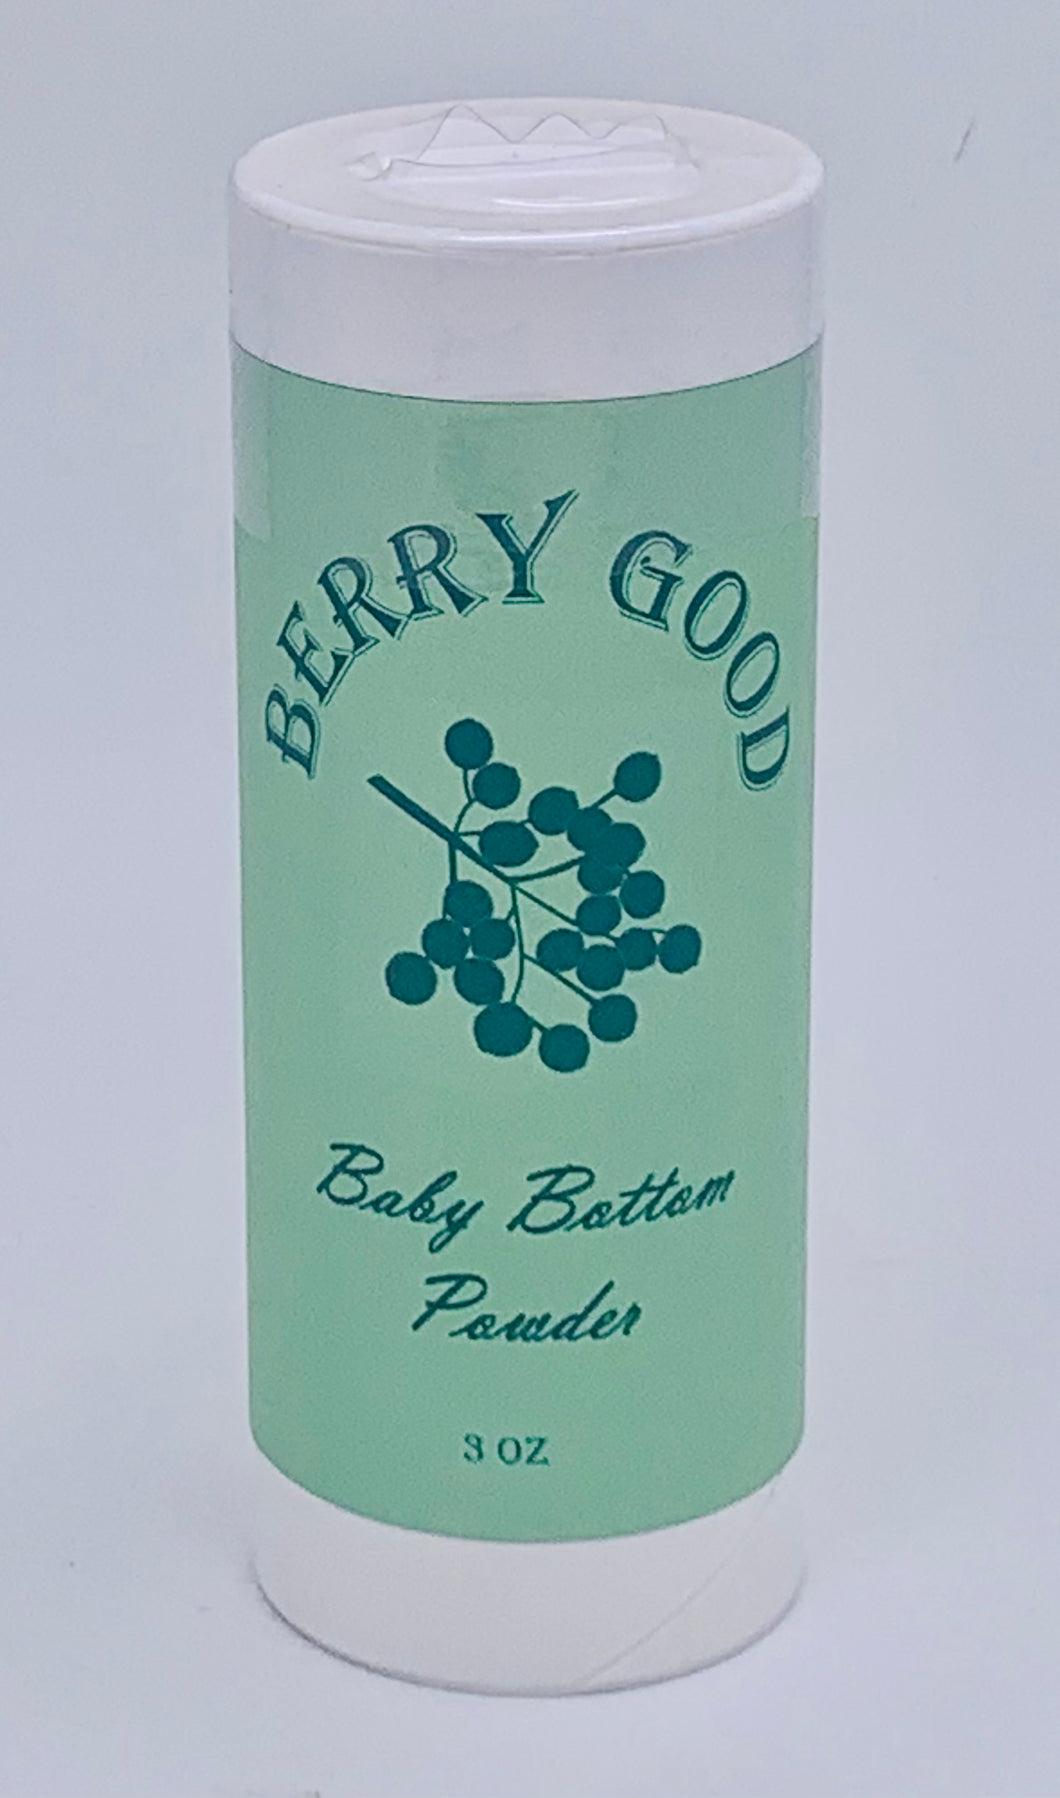 Berry Good Baby Powder